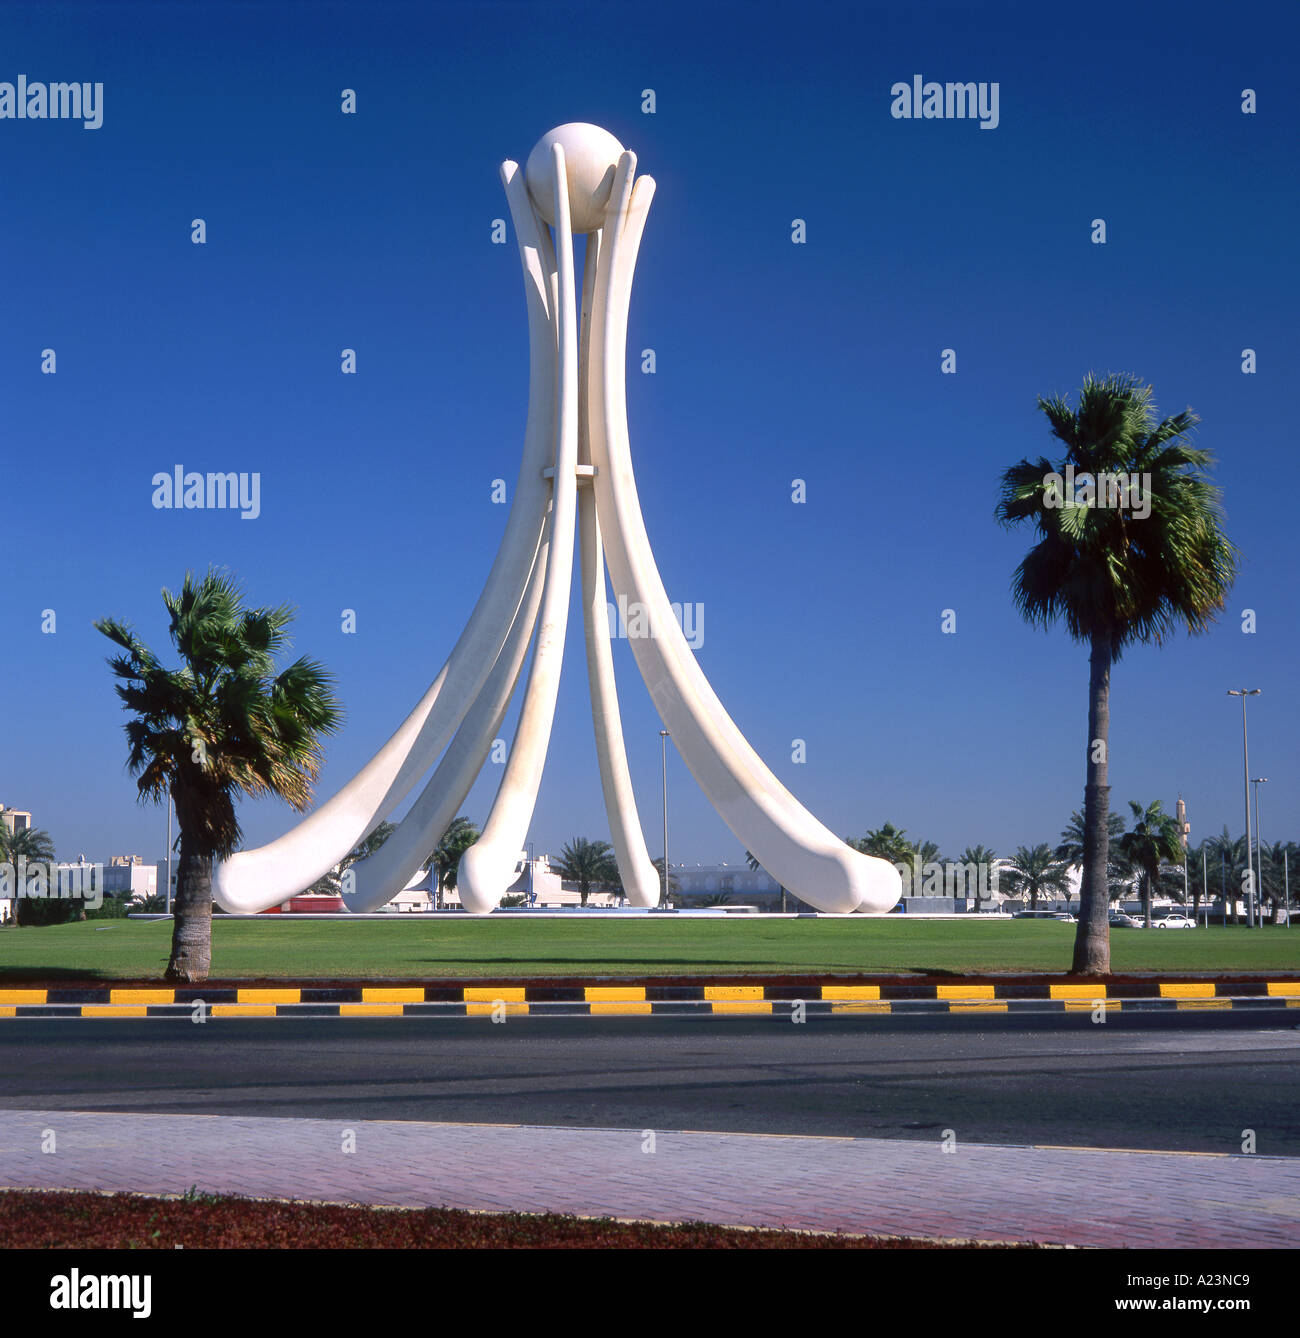 La Perla rotonda re Faisal Highway Manama Bahrain Golfo Persico Medio Oriente Foto Stock